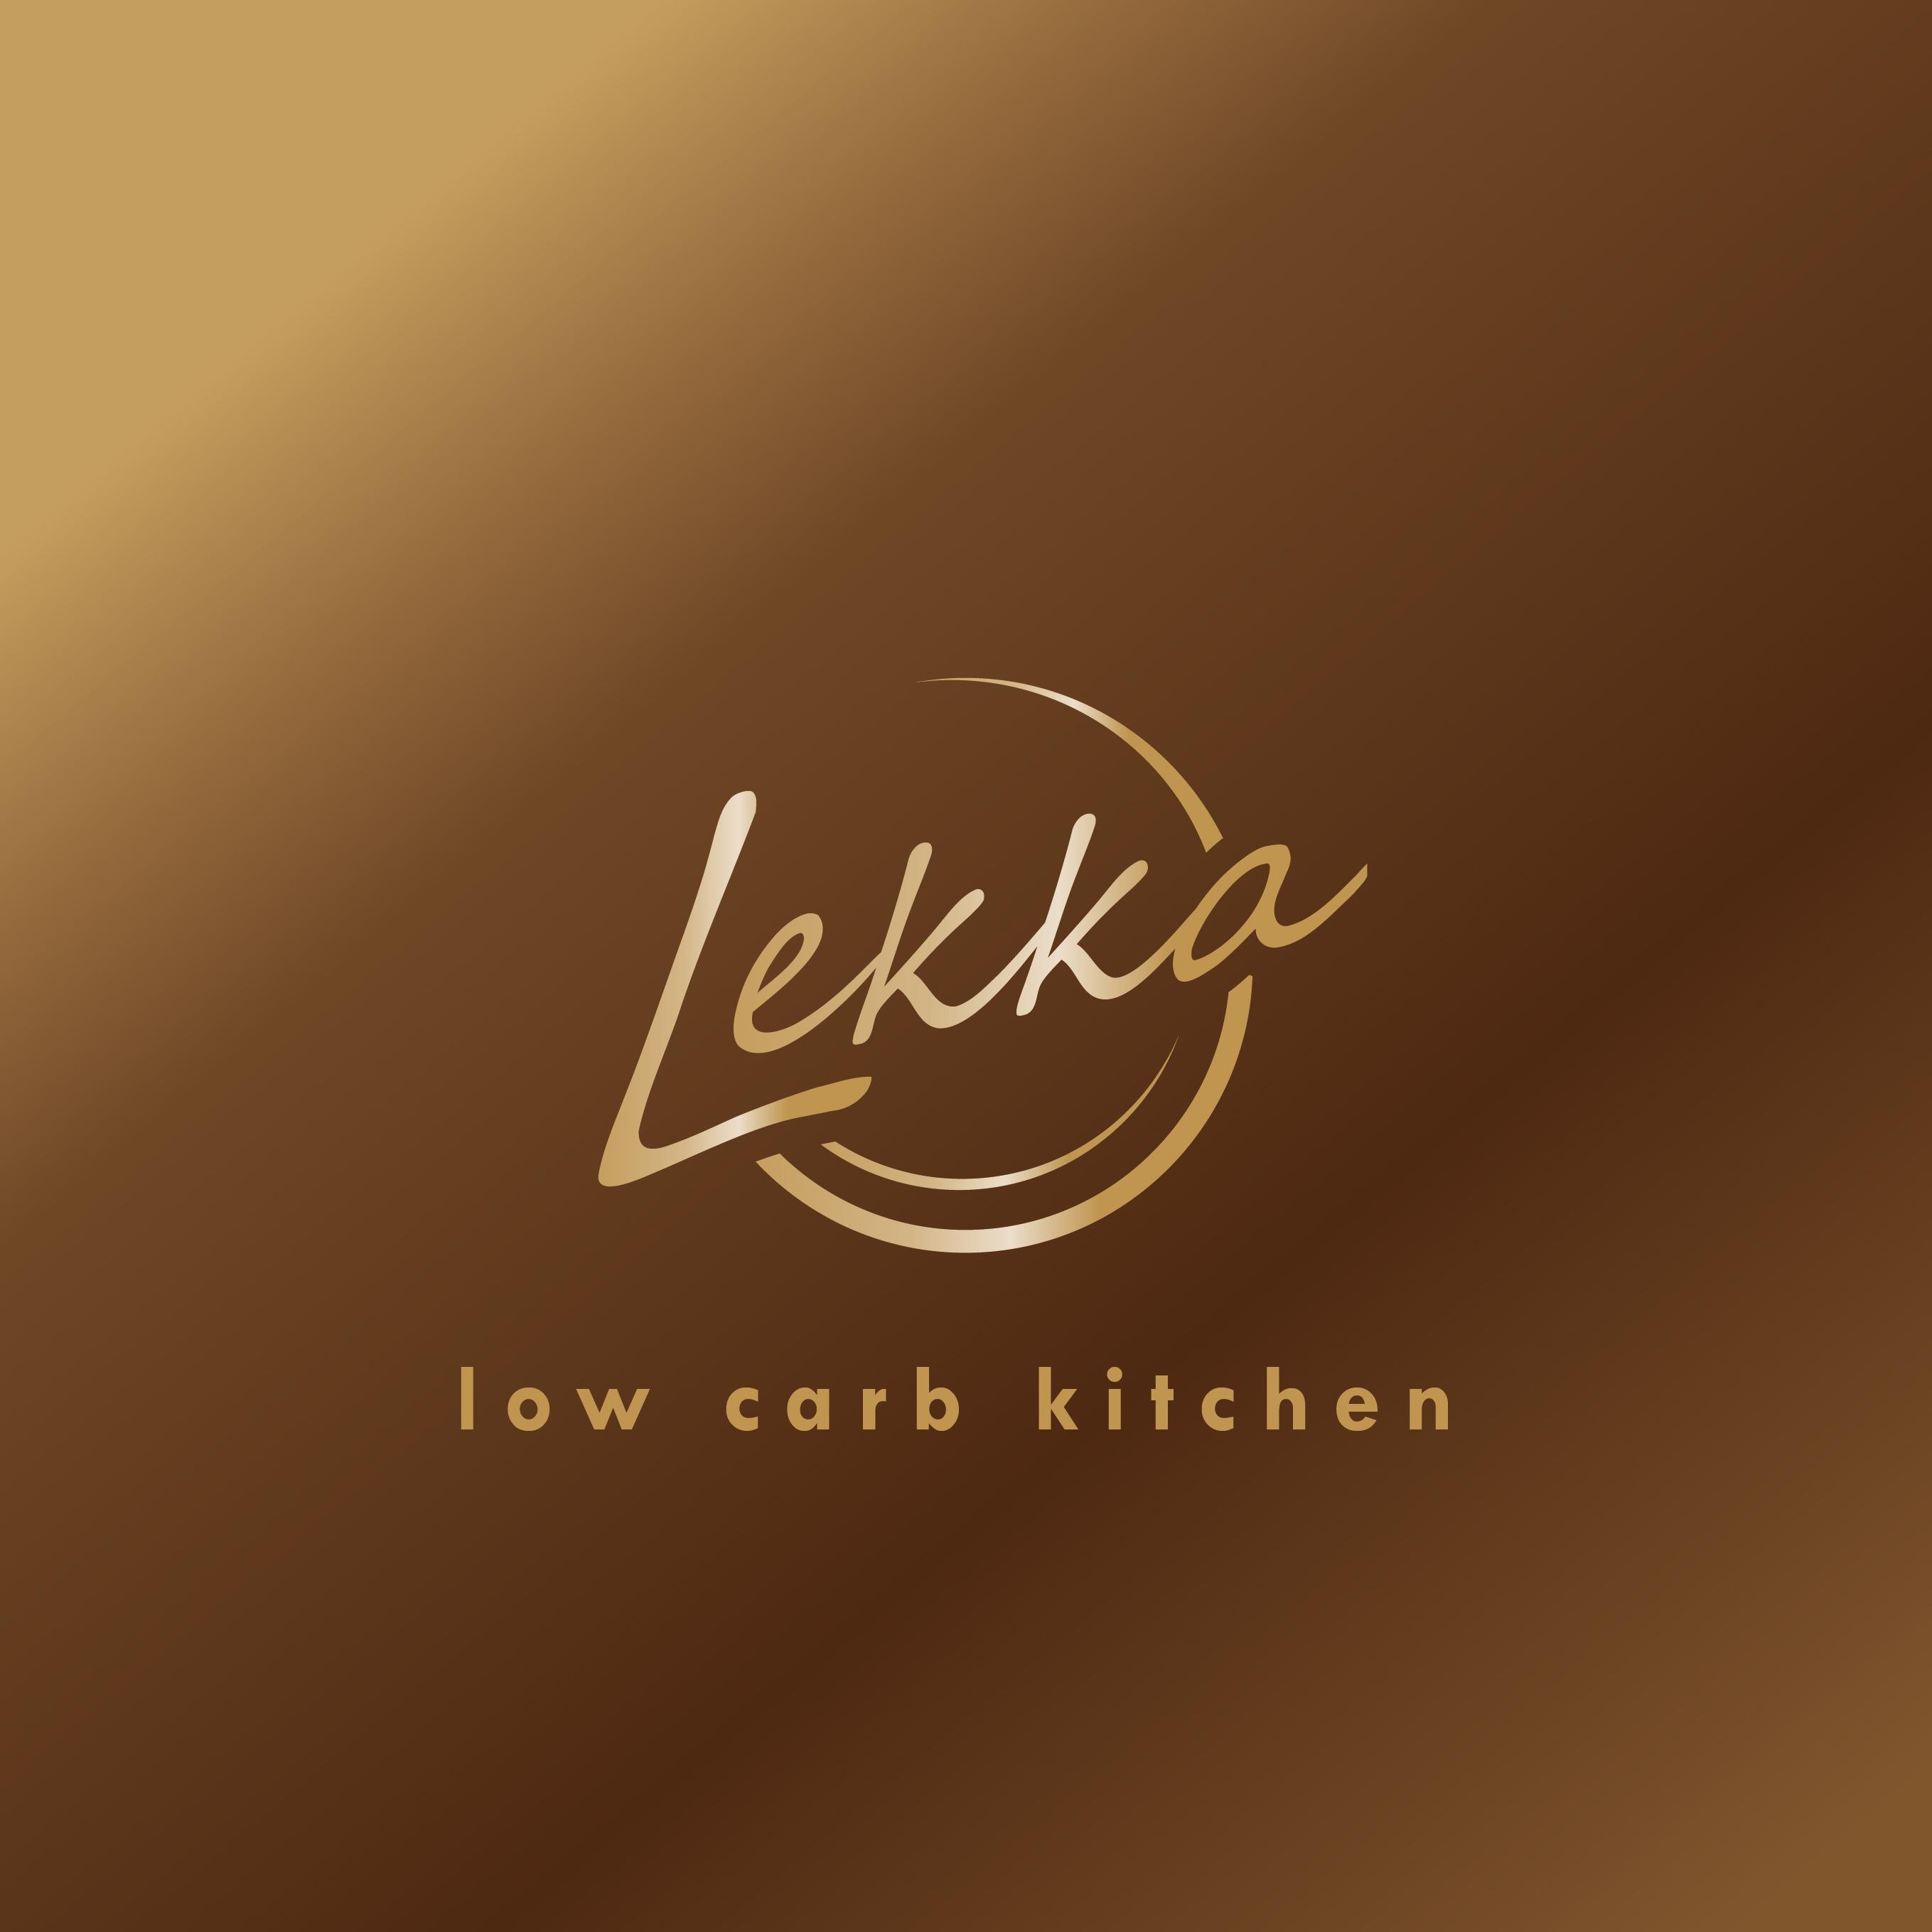 Lekka Low Carb Kitchen in Essen - Logo